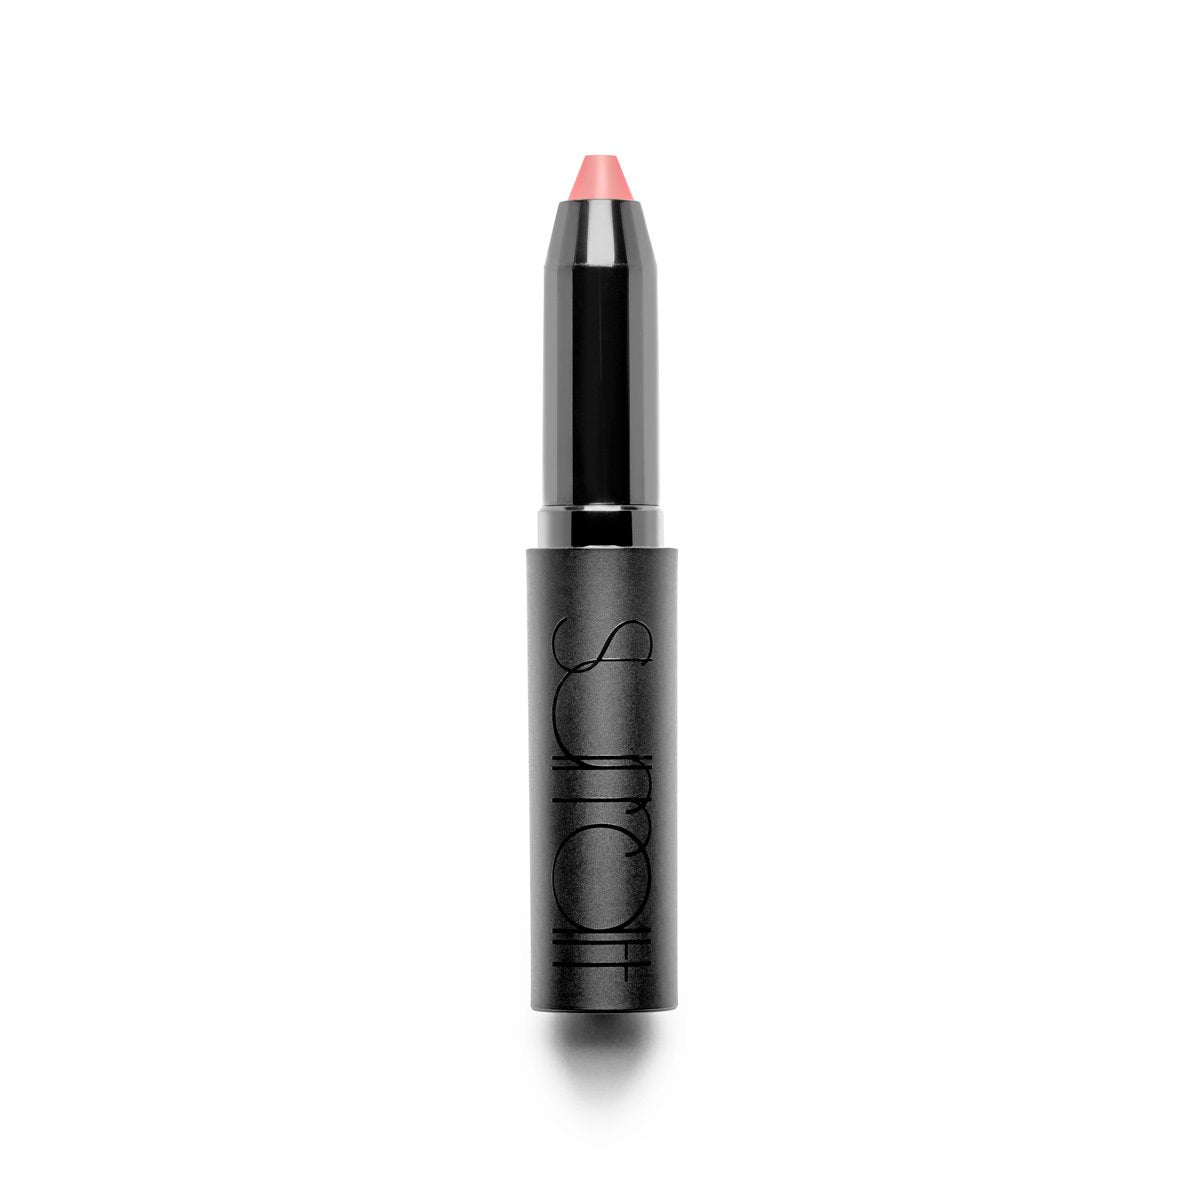 GENTILLESSE - Pale Pink - long-wearing matte finish lipstick in pale pink shade